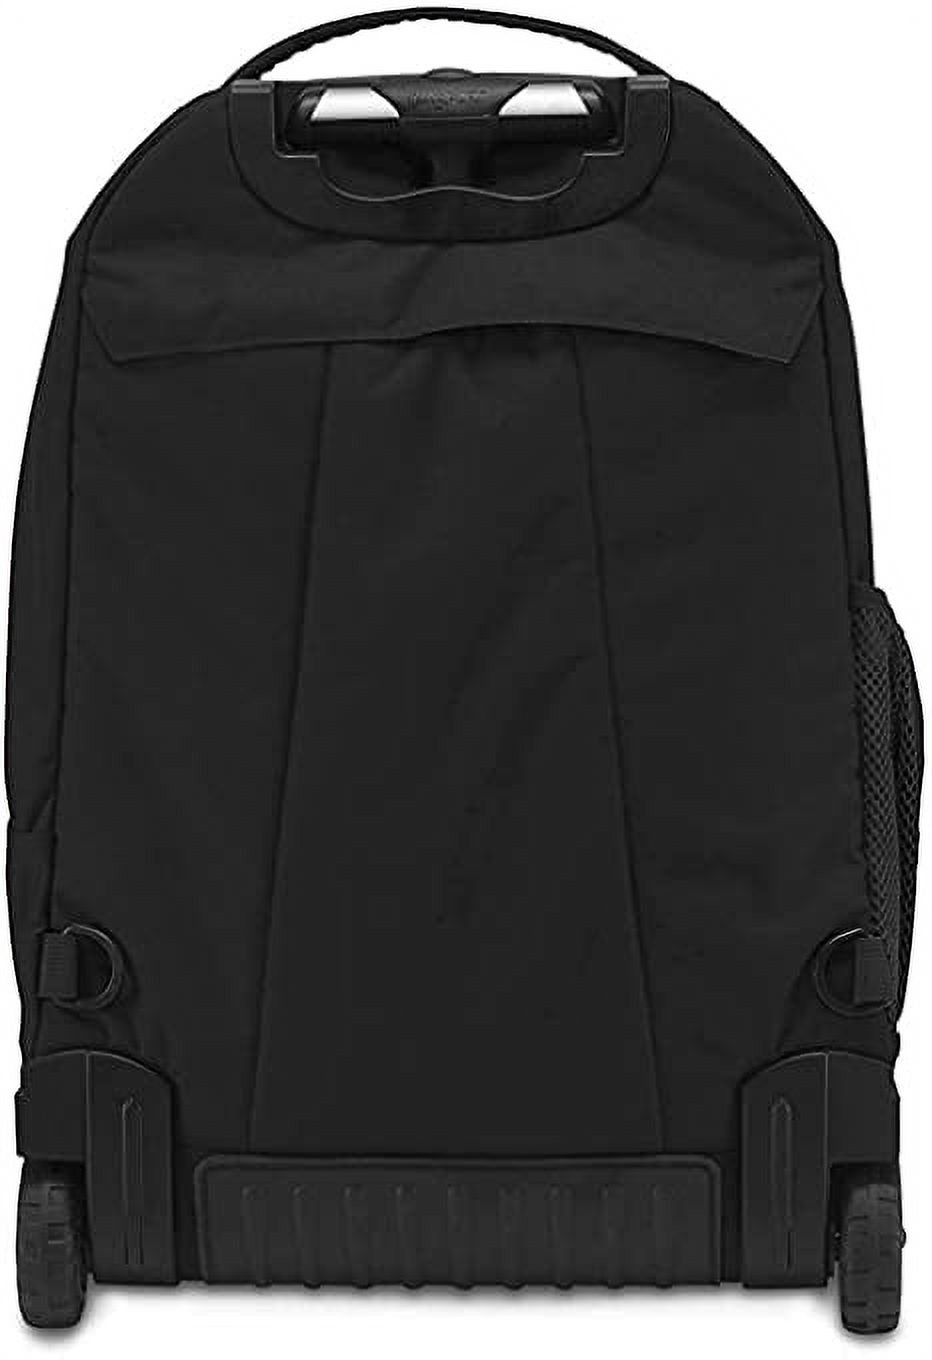 JanSport Driver 8 Rolling Backpack - Wheeled Travel Bag with 15-Inch Laptop Sleeve (Black) - image 3 of 4